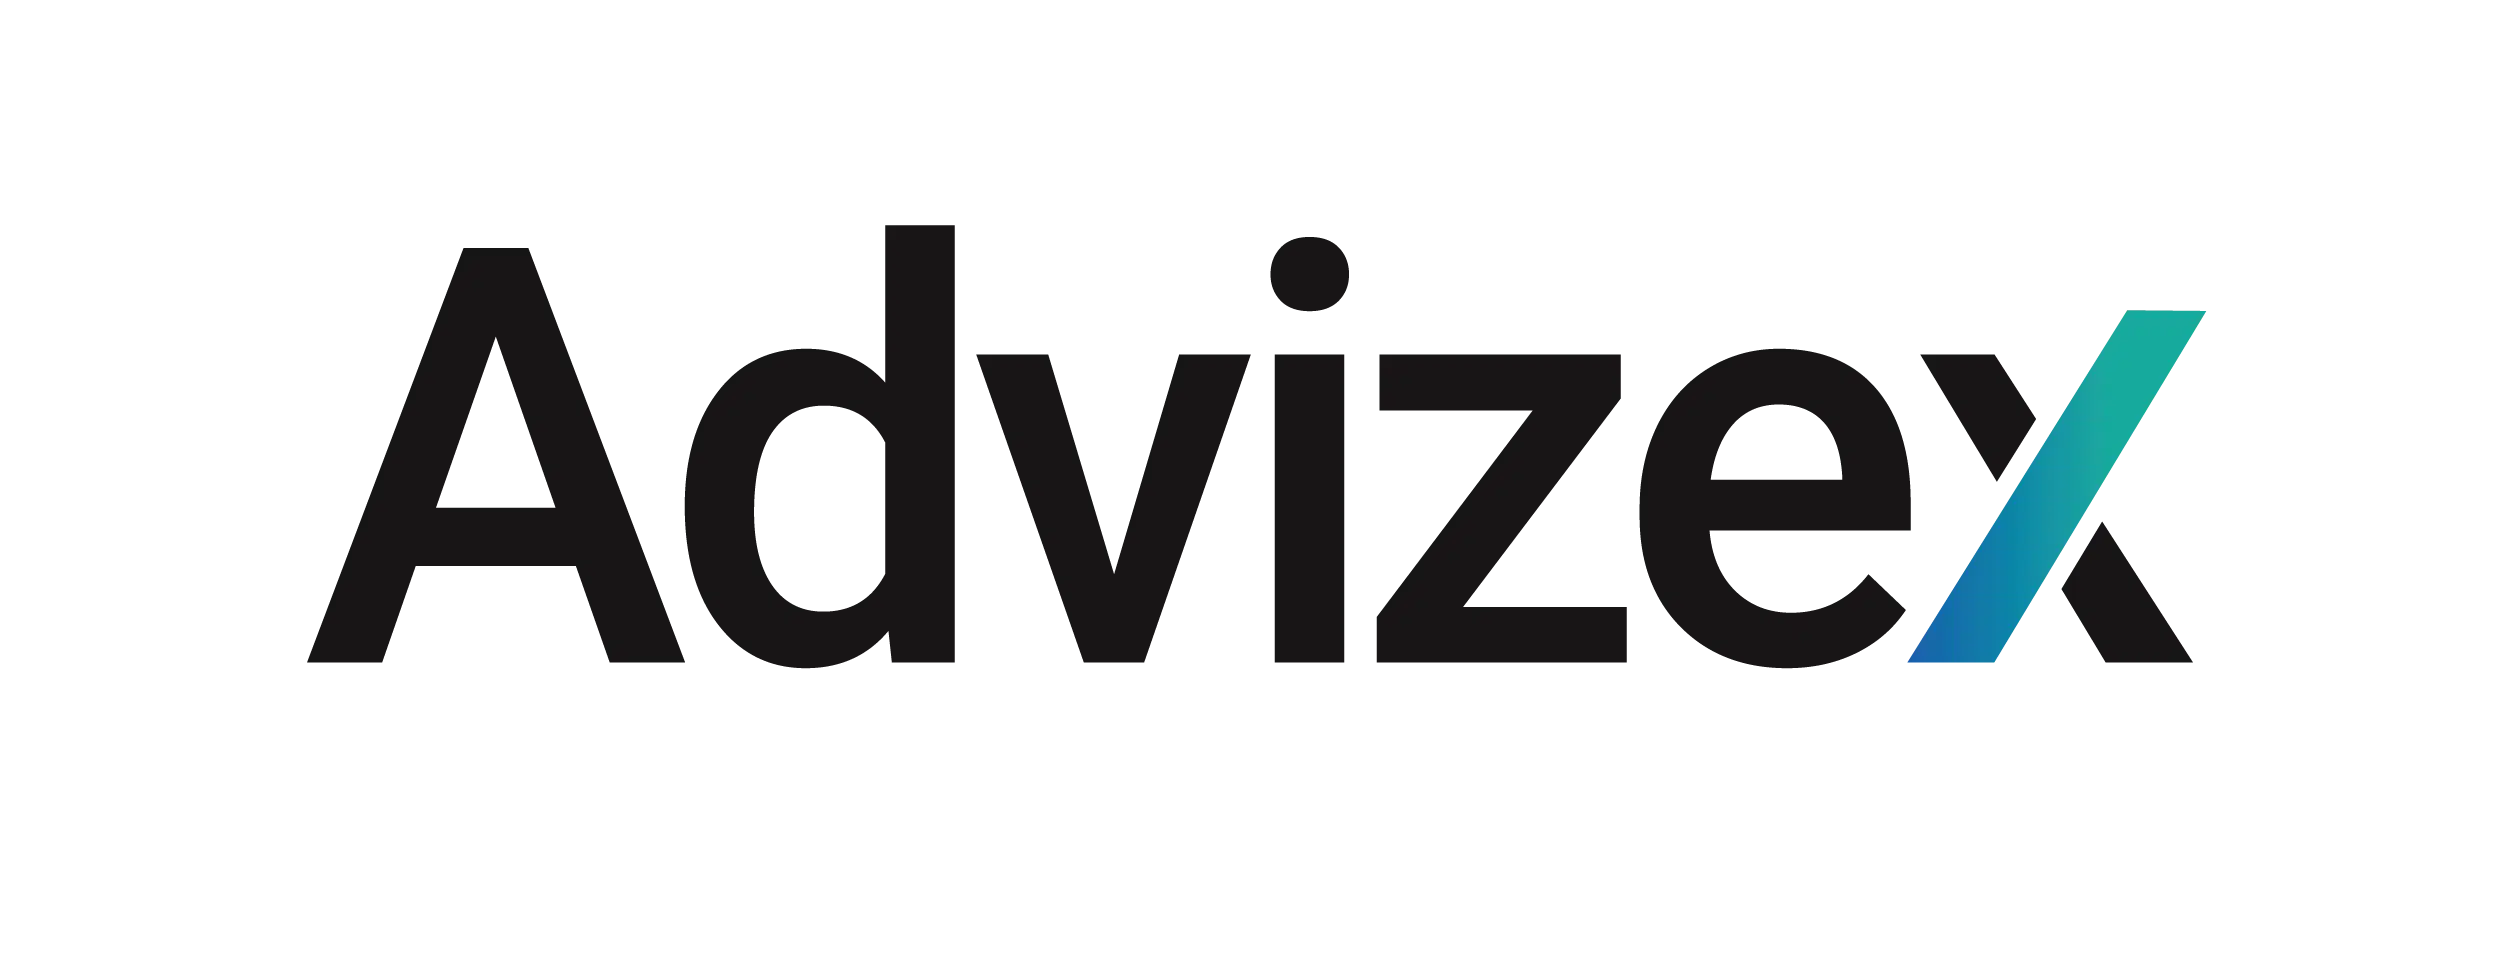 Partners - Advizex primary logo RGB 2020.png